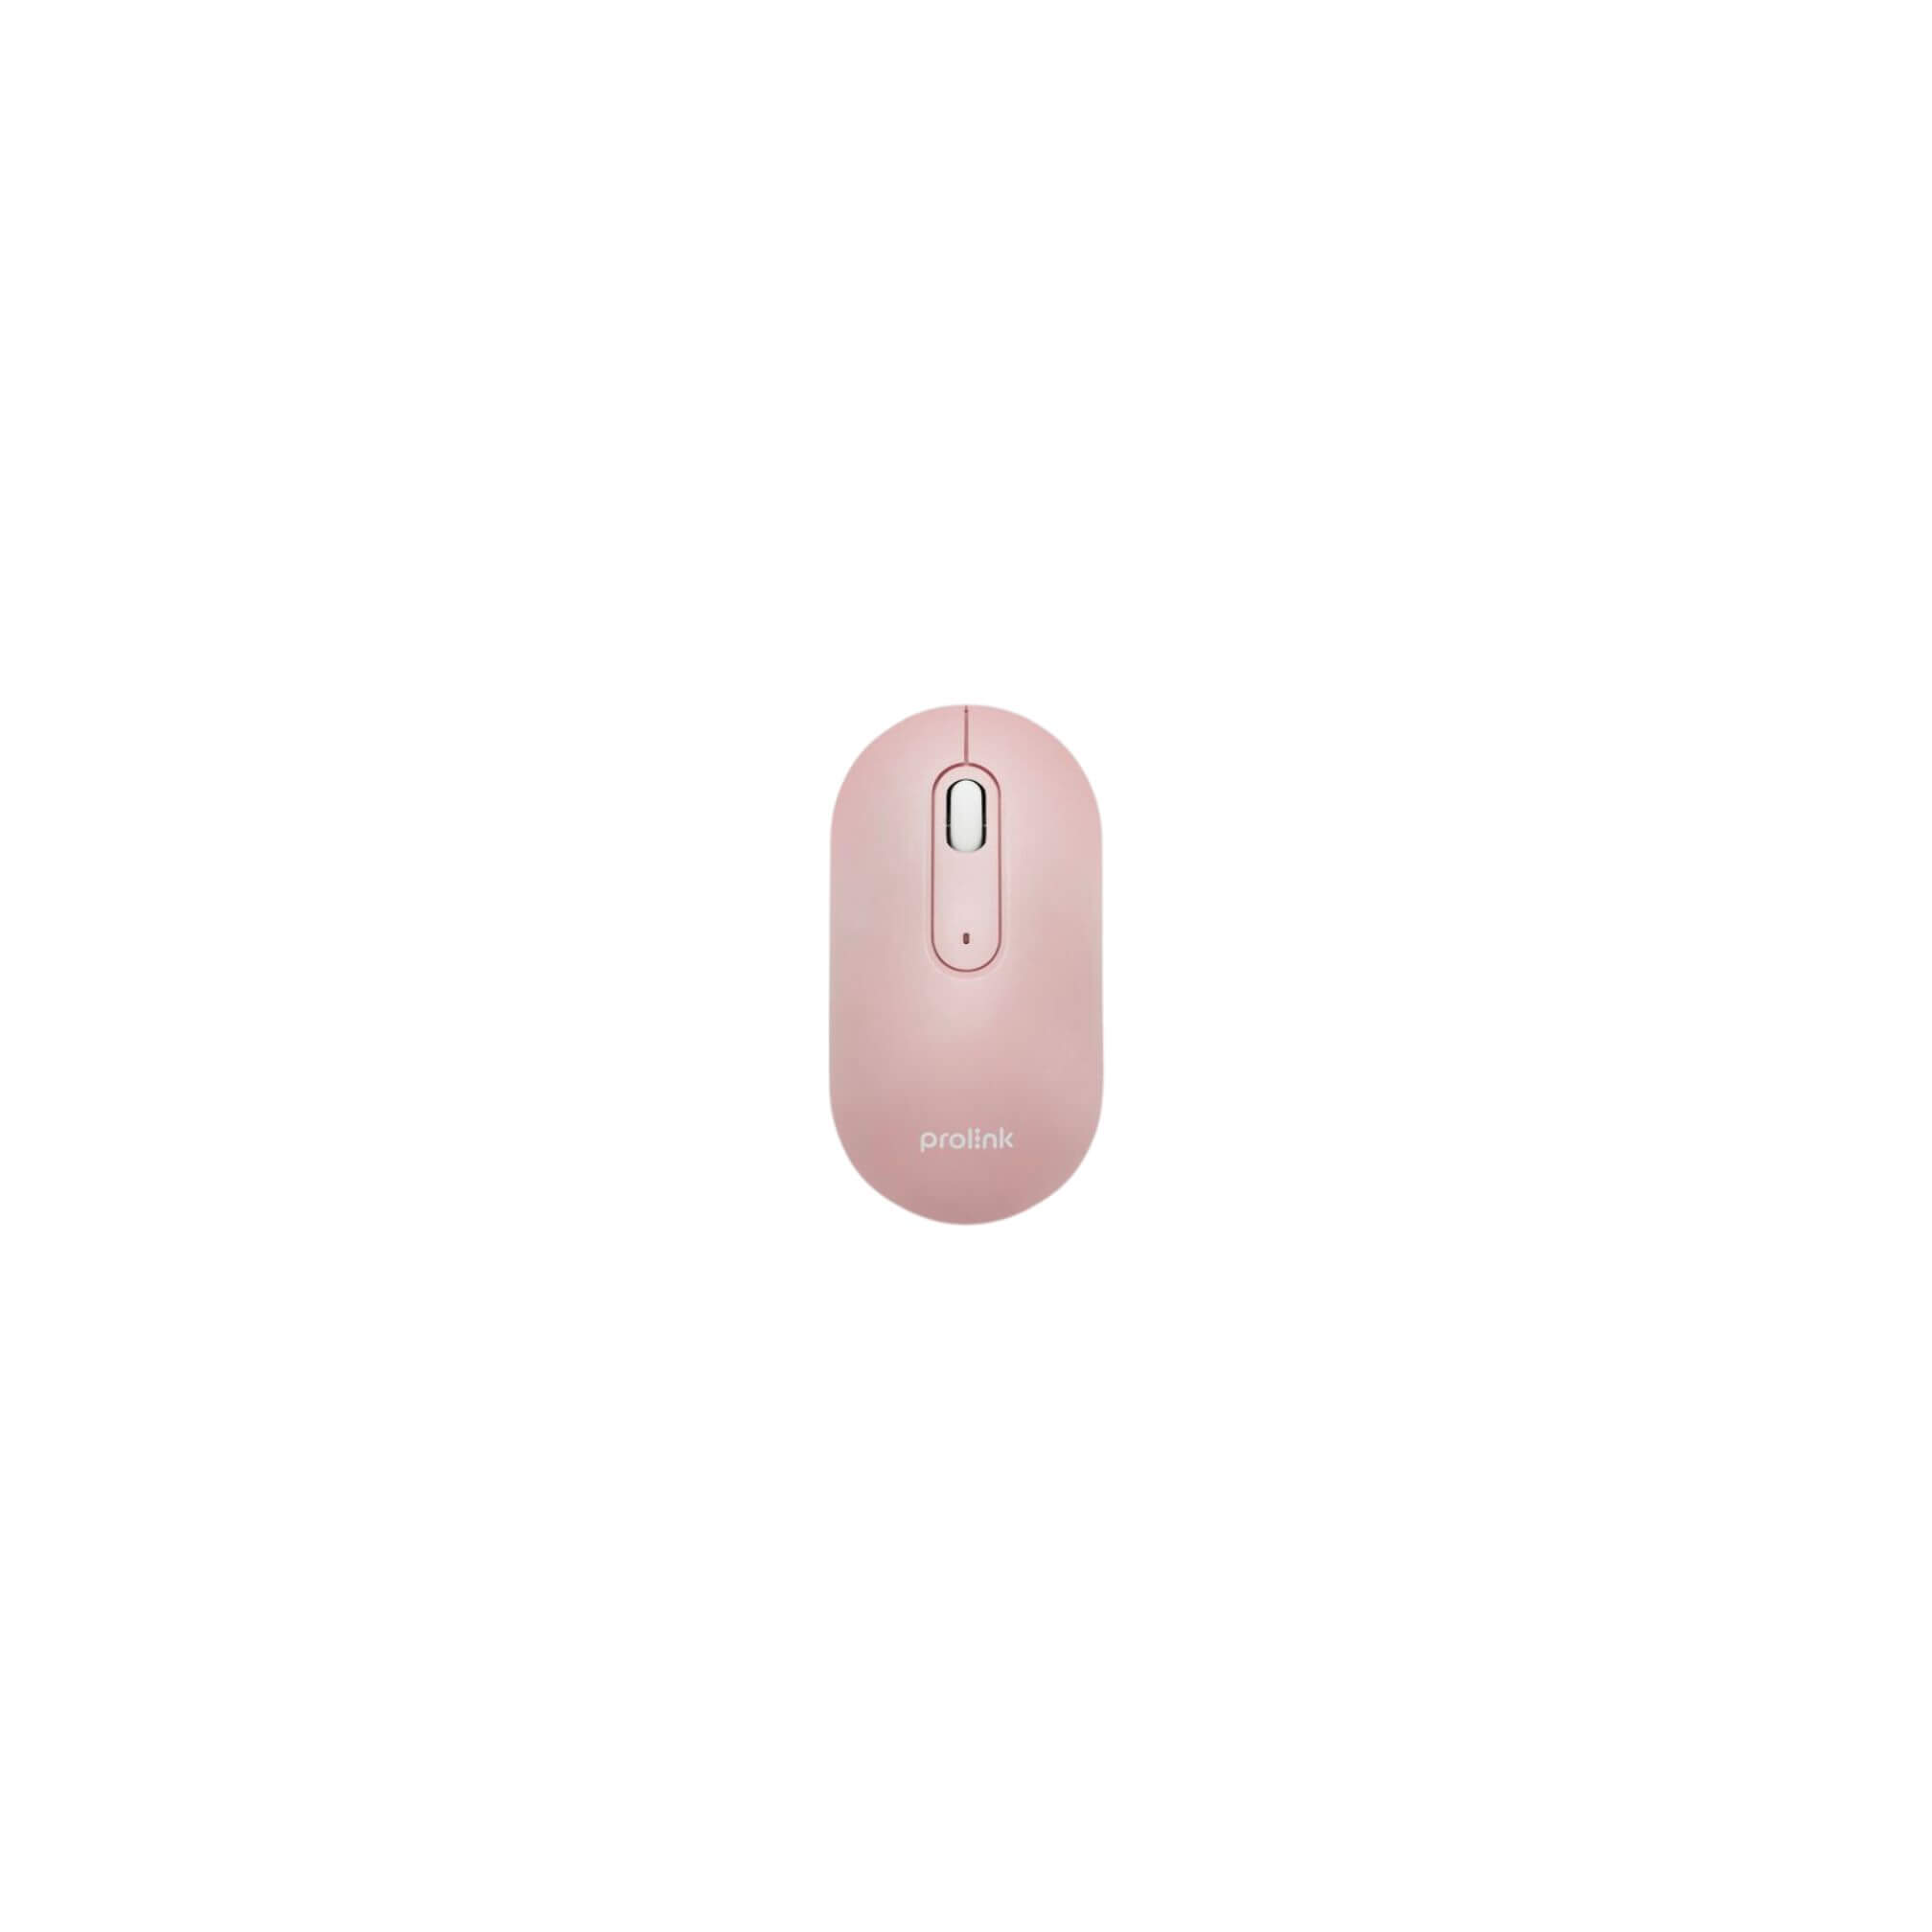 https://urbangadgets.ph/wp-content/uploads/Prolink-Wireless-Mouse-Pink.jpeg